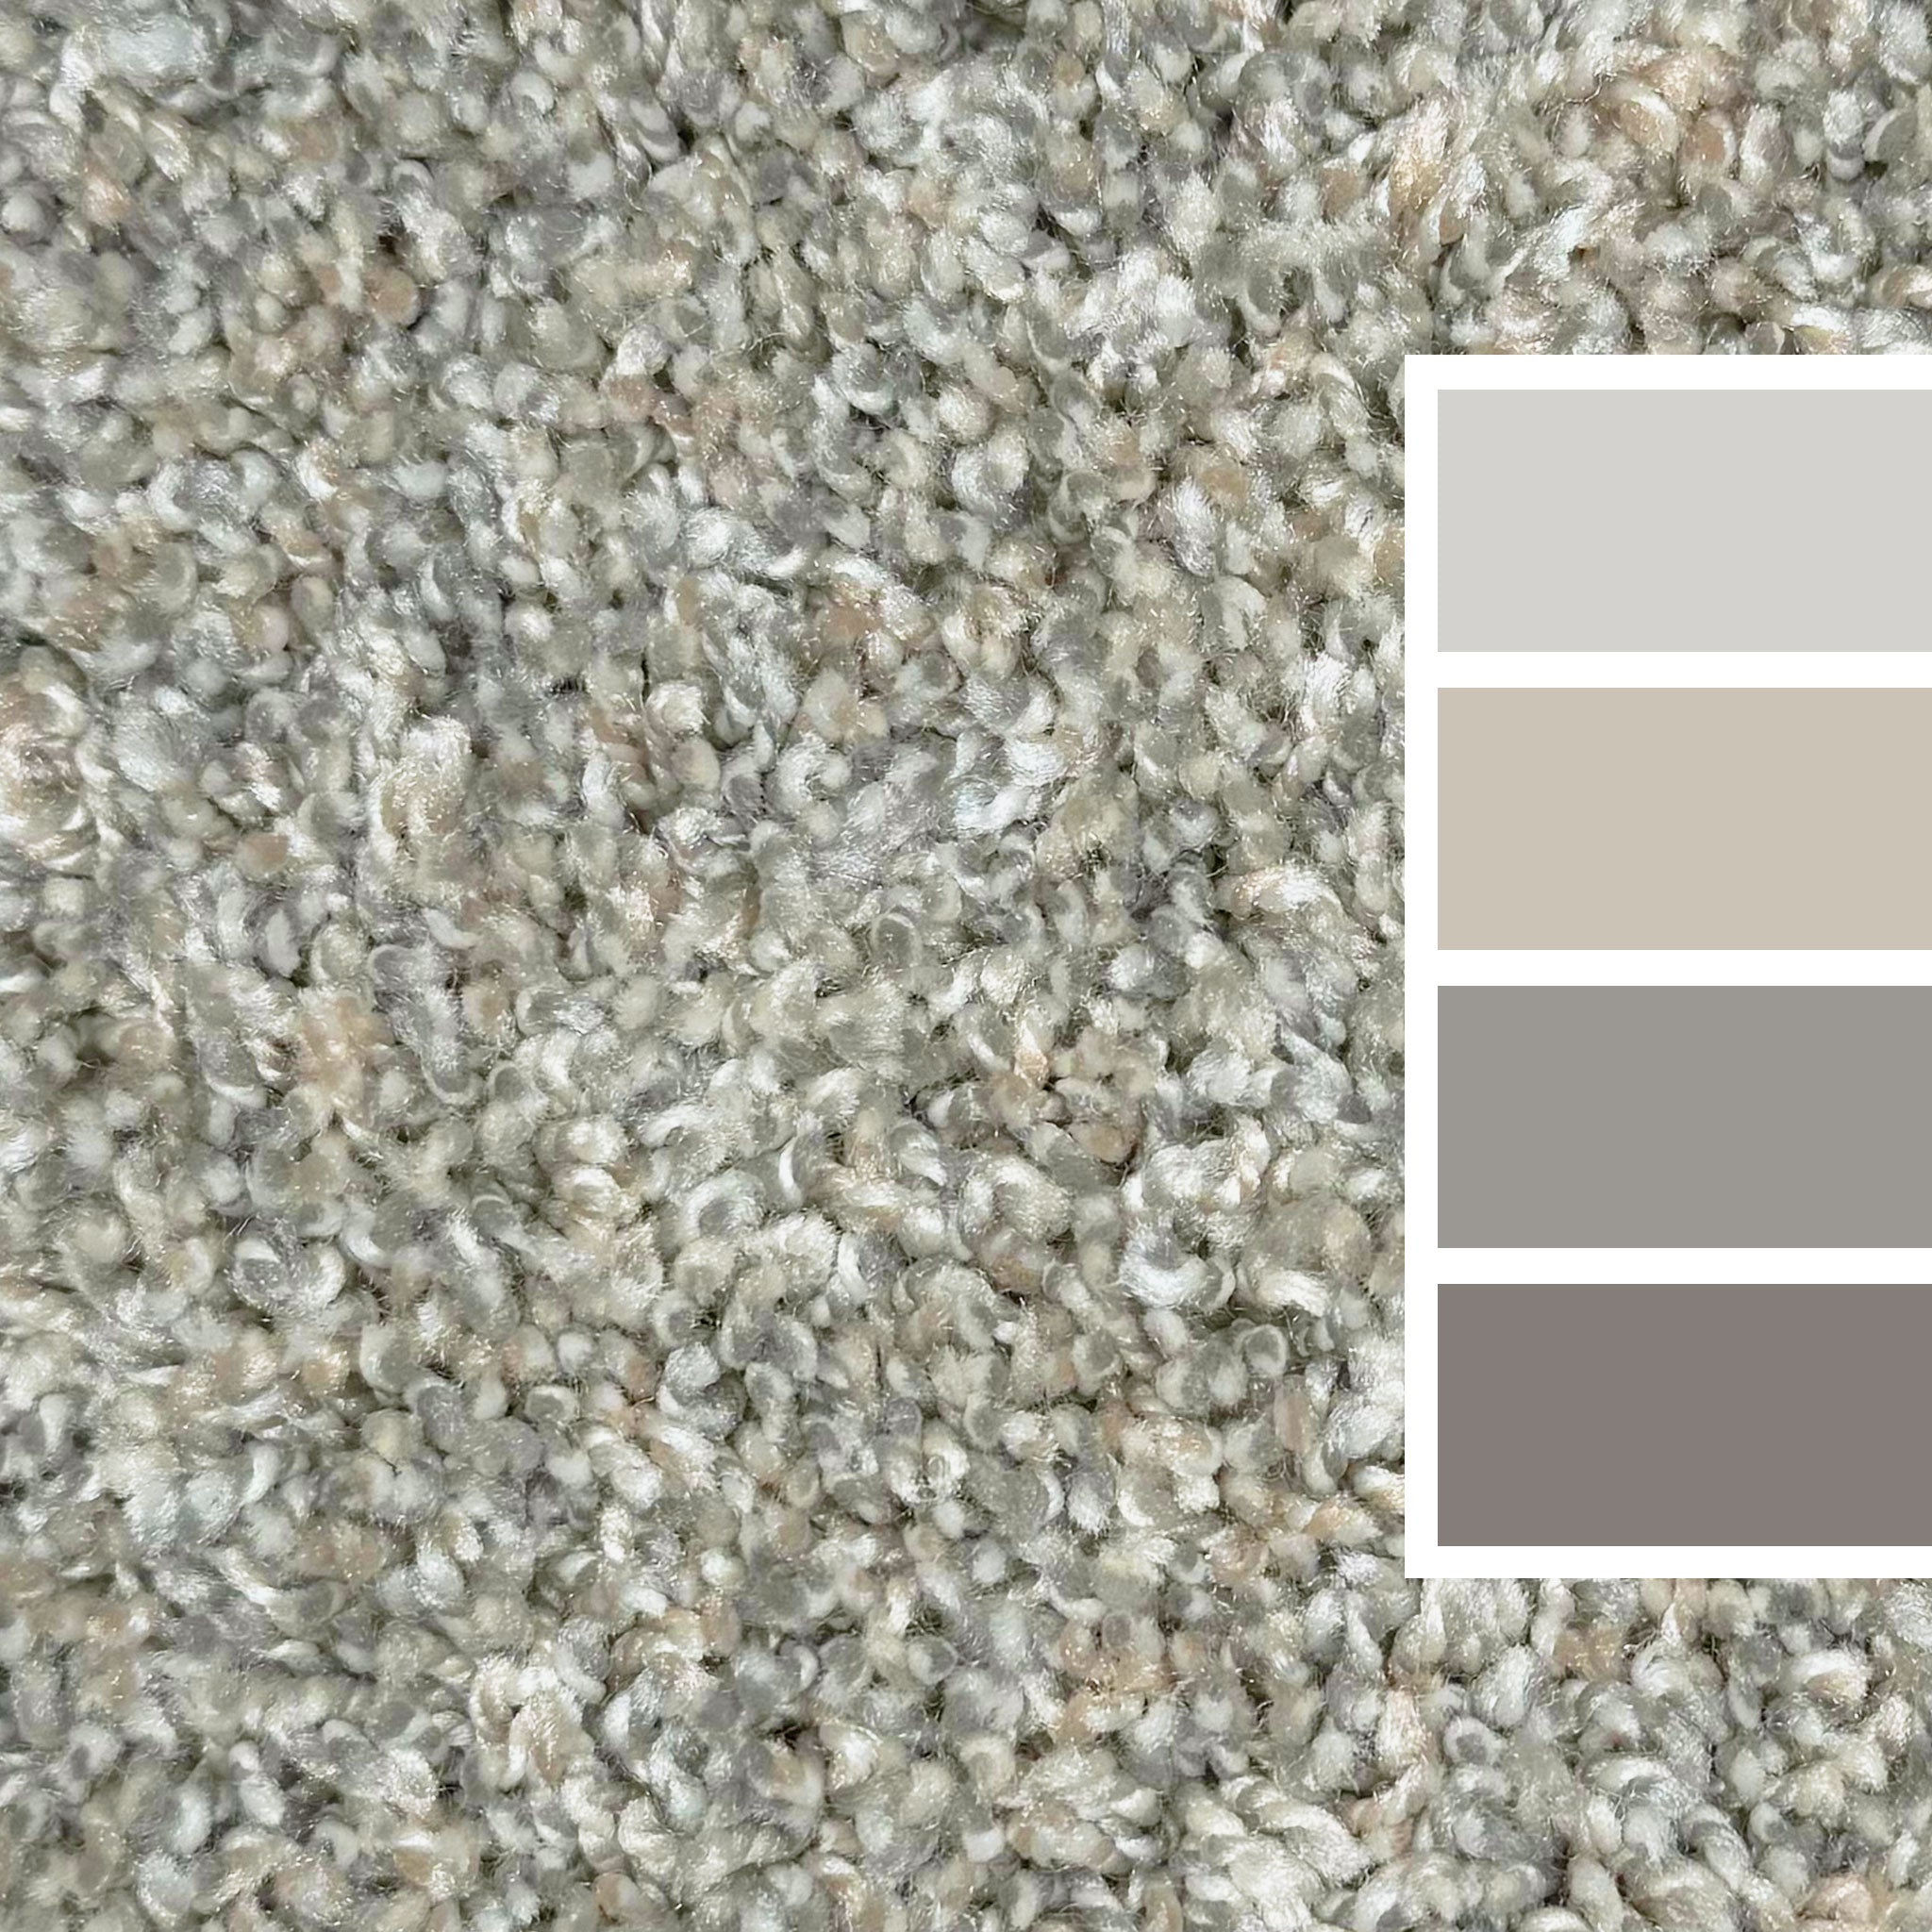 Marble Glaze Carpet, Windy City I, Carpet by Dreamweaver, Calhoun's Flooring Springfield, IL Color Swatch